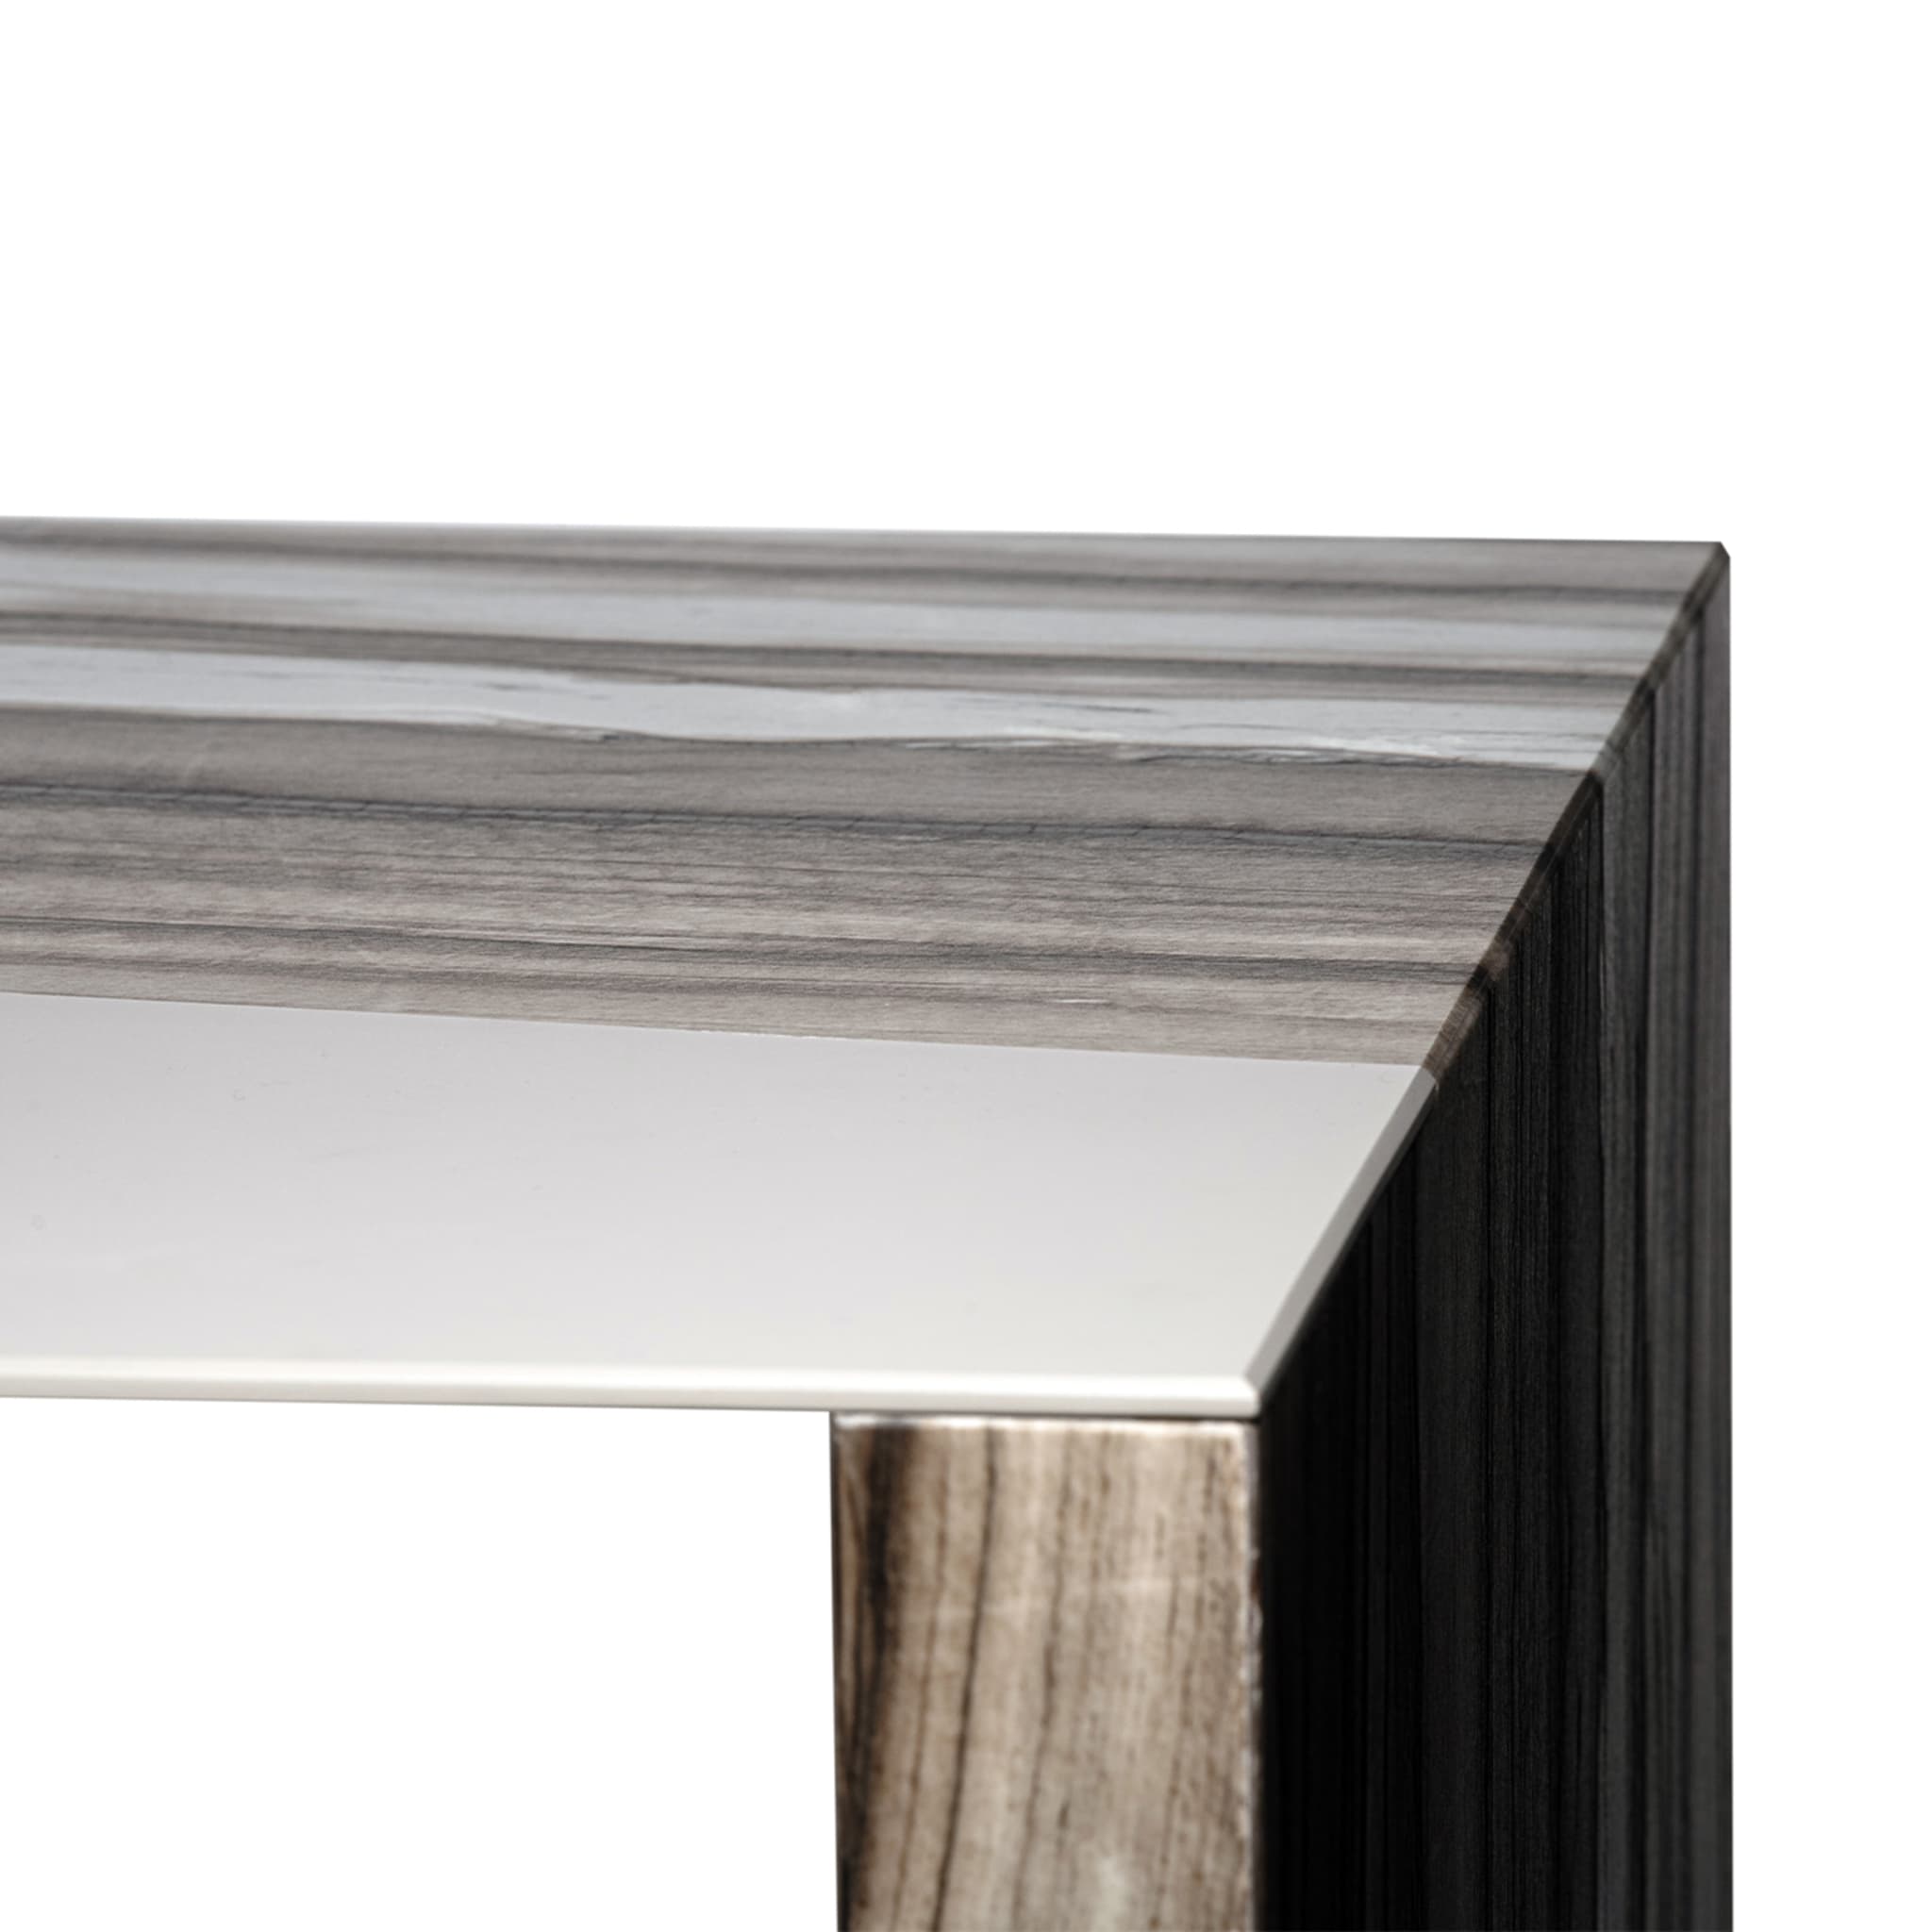 Tabula Rasa N°1 Silver Table by MM Design  - Alternative view 4